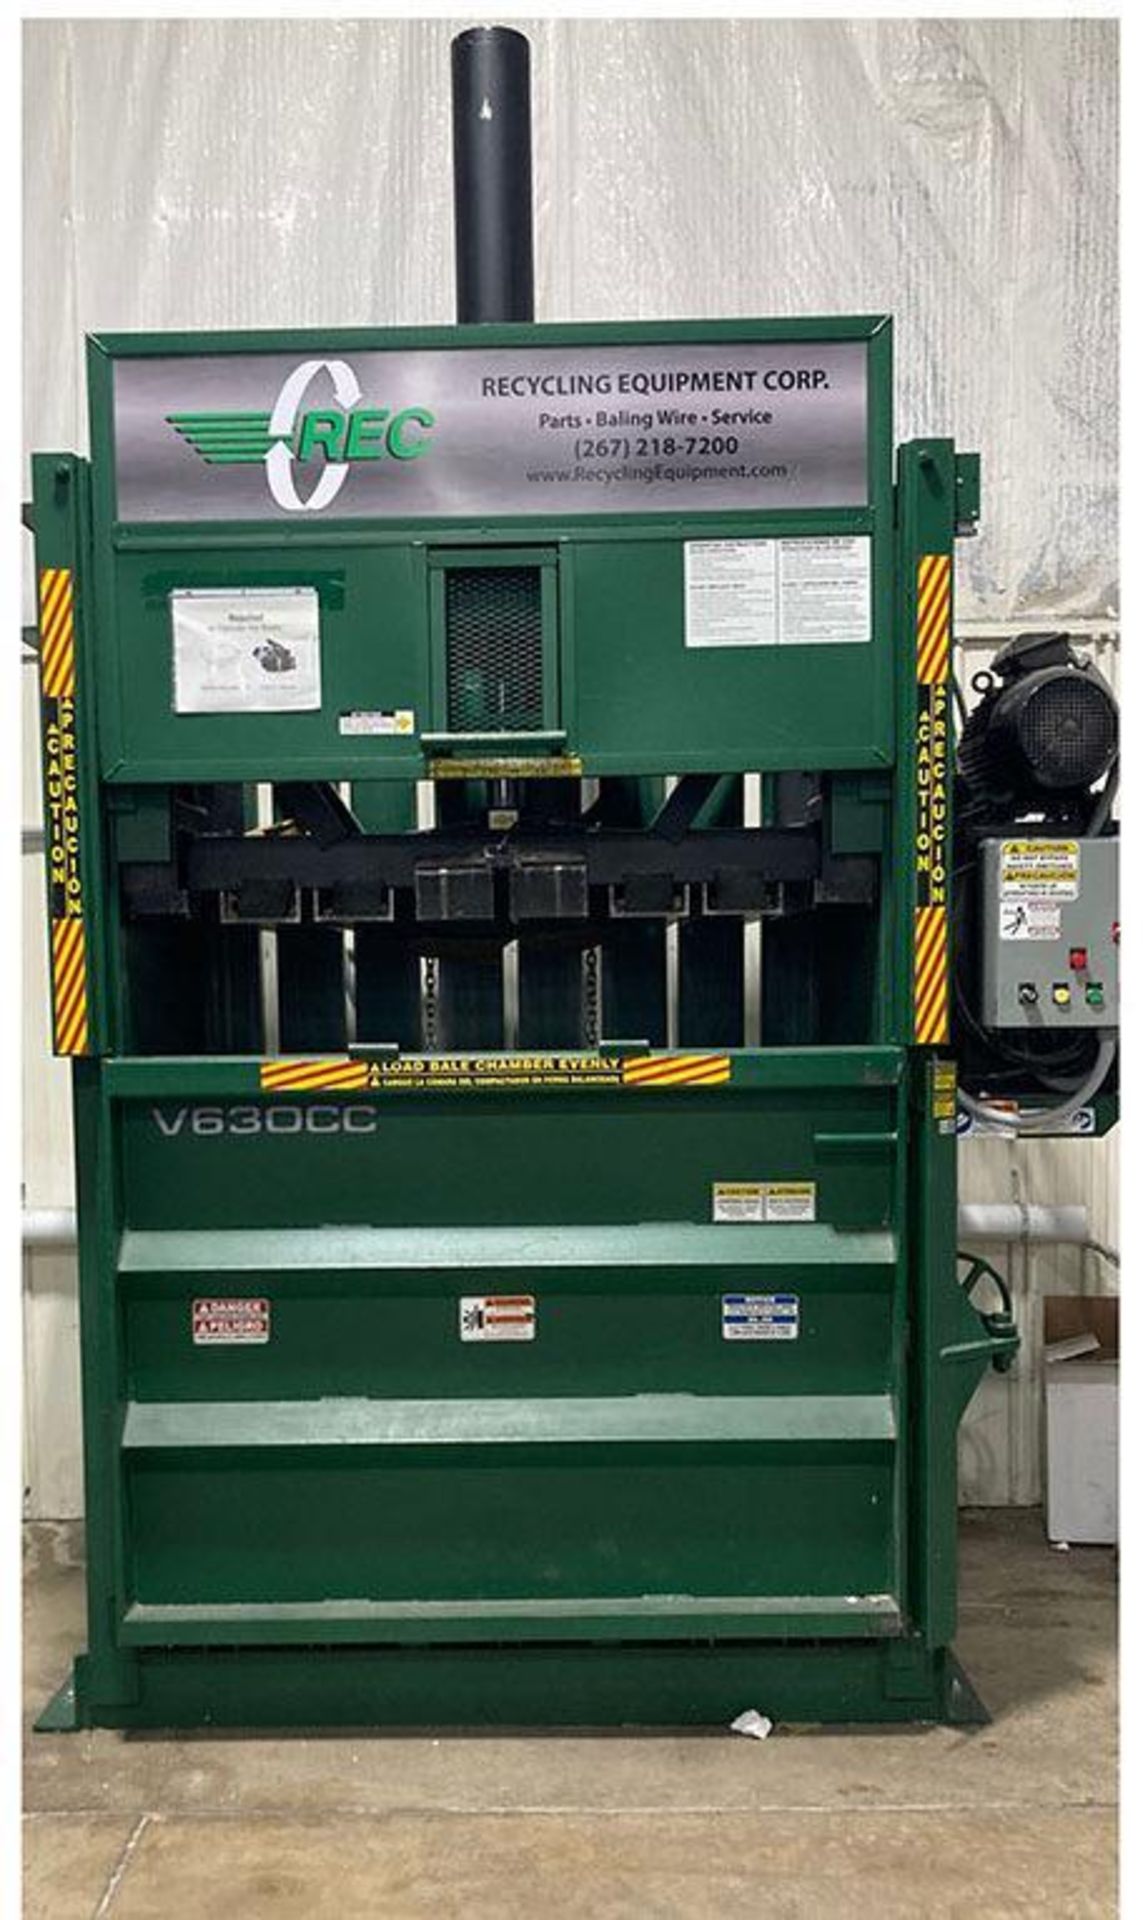 2019 Recycling Equipment Corp. Vertical Hydraulic Baler, Model V630CC (Located At 2647 Morgan Lane,